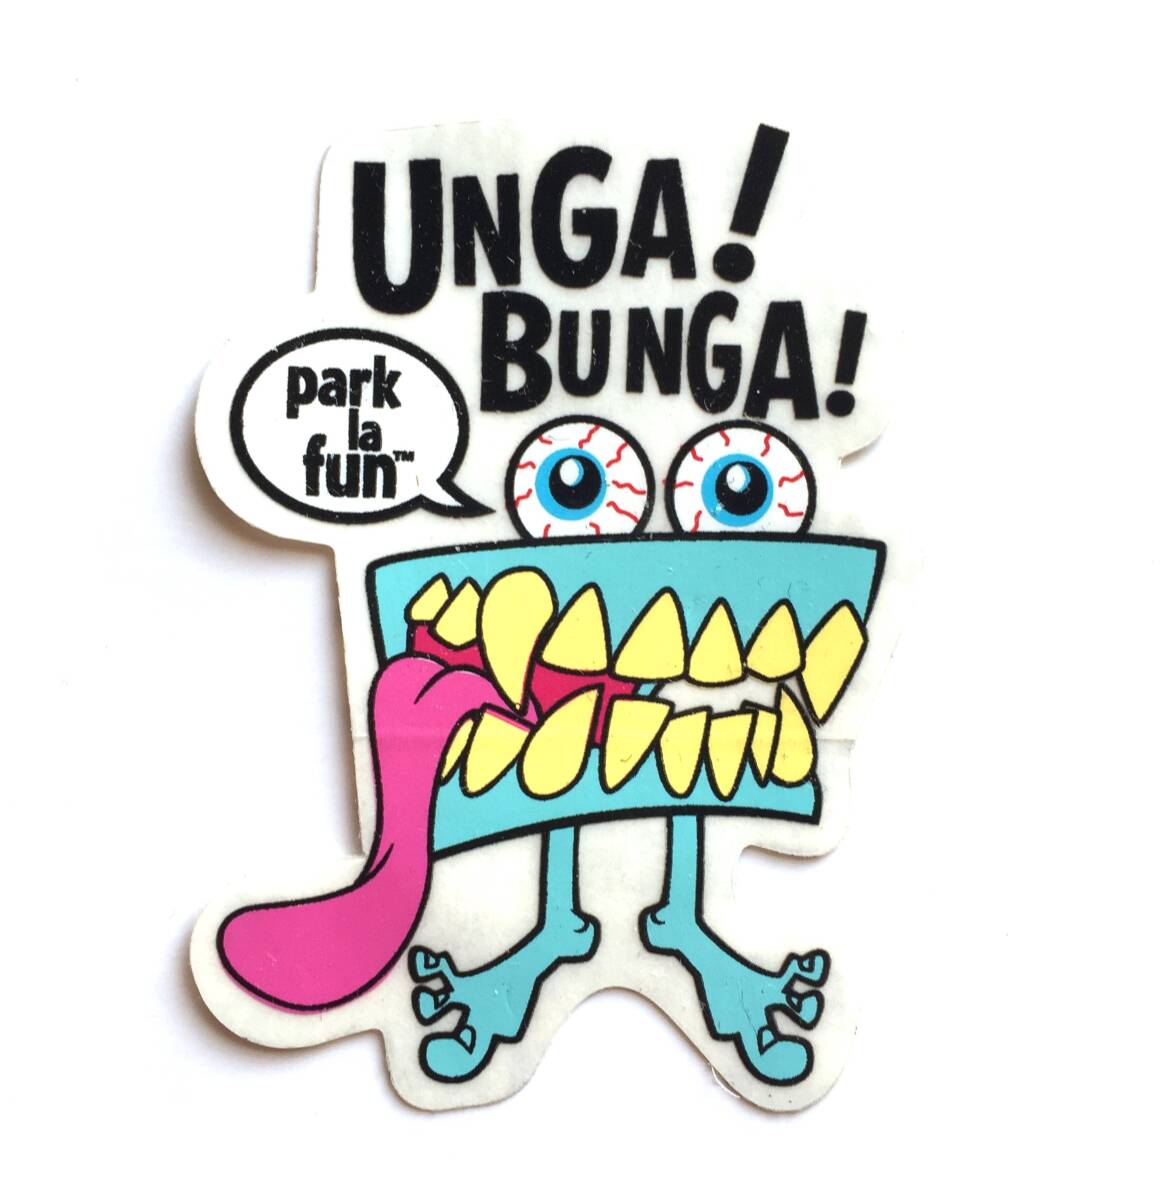 ◆Park la fun Unga! Bunga! ステッカー Paul Frank ポールフランク 歯 モンスター_画像1